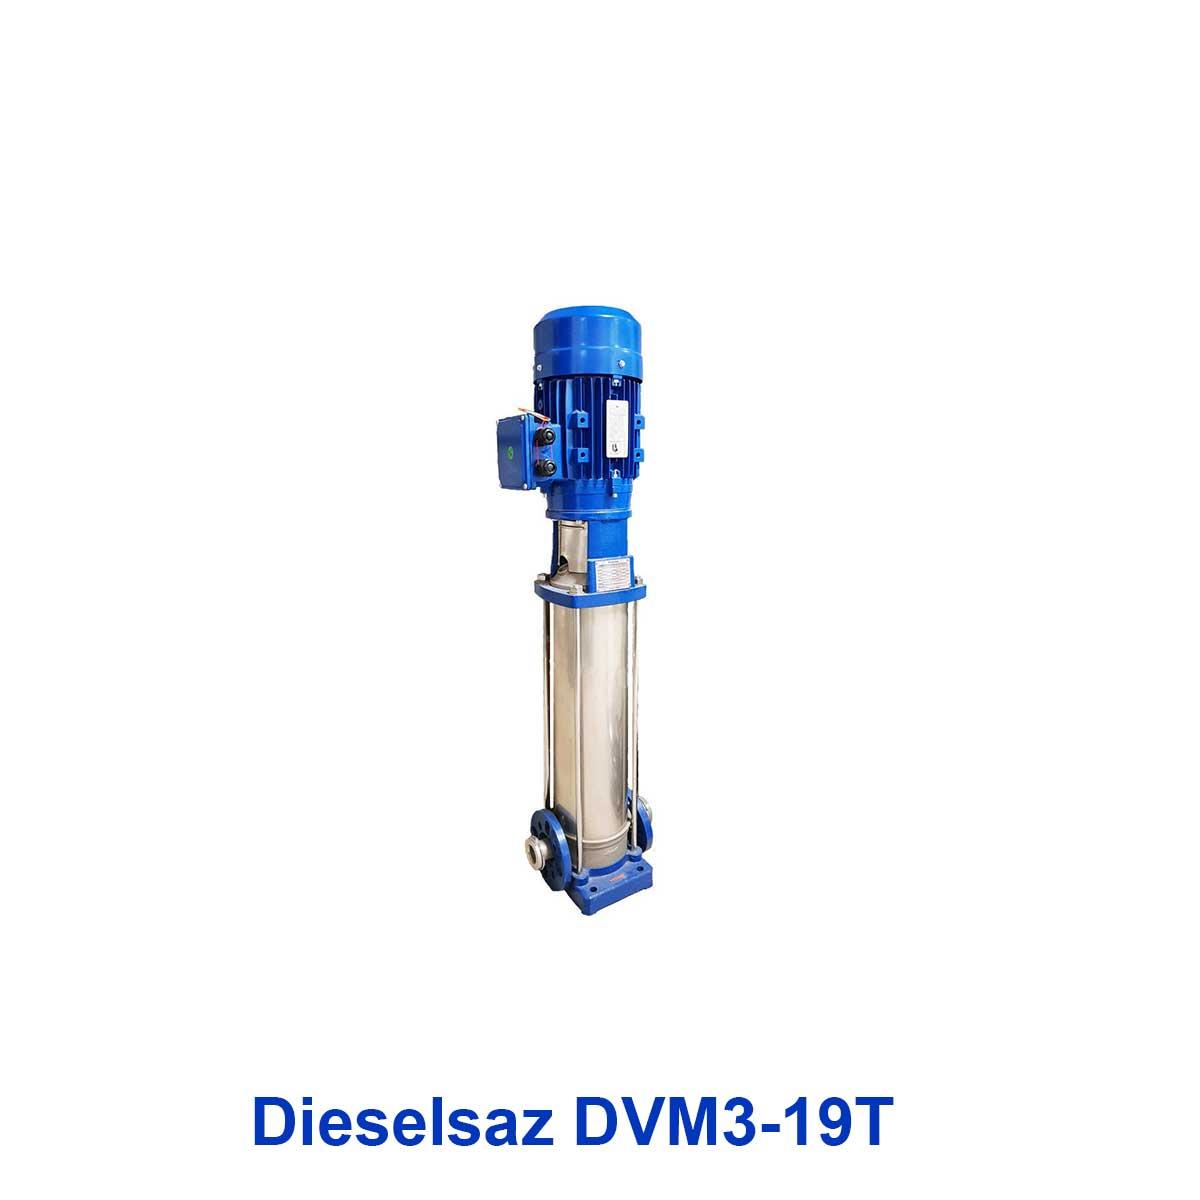 waterpump-vertical-Dieselsaz-DVM3-19T